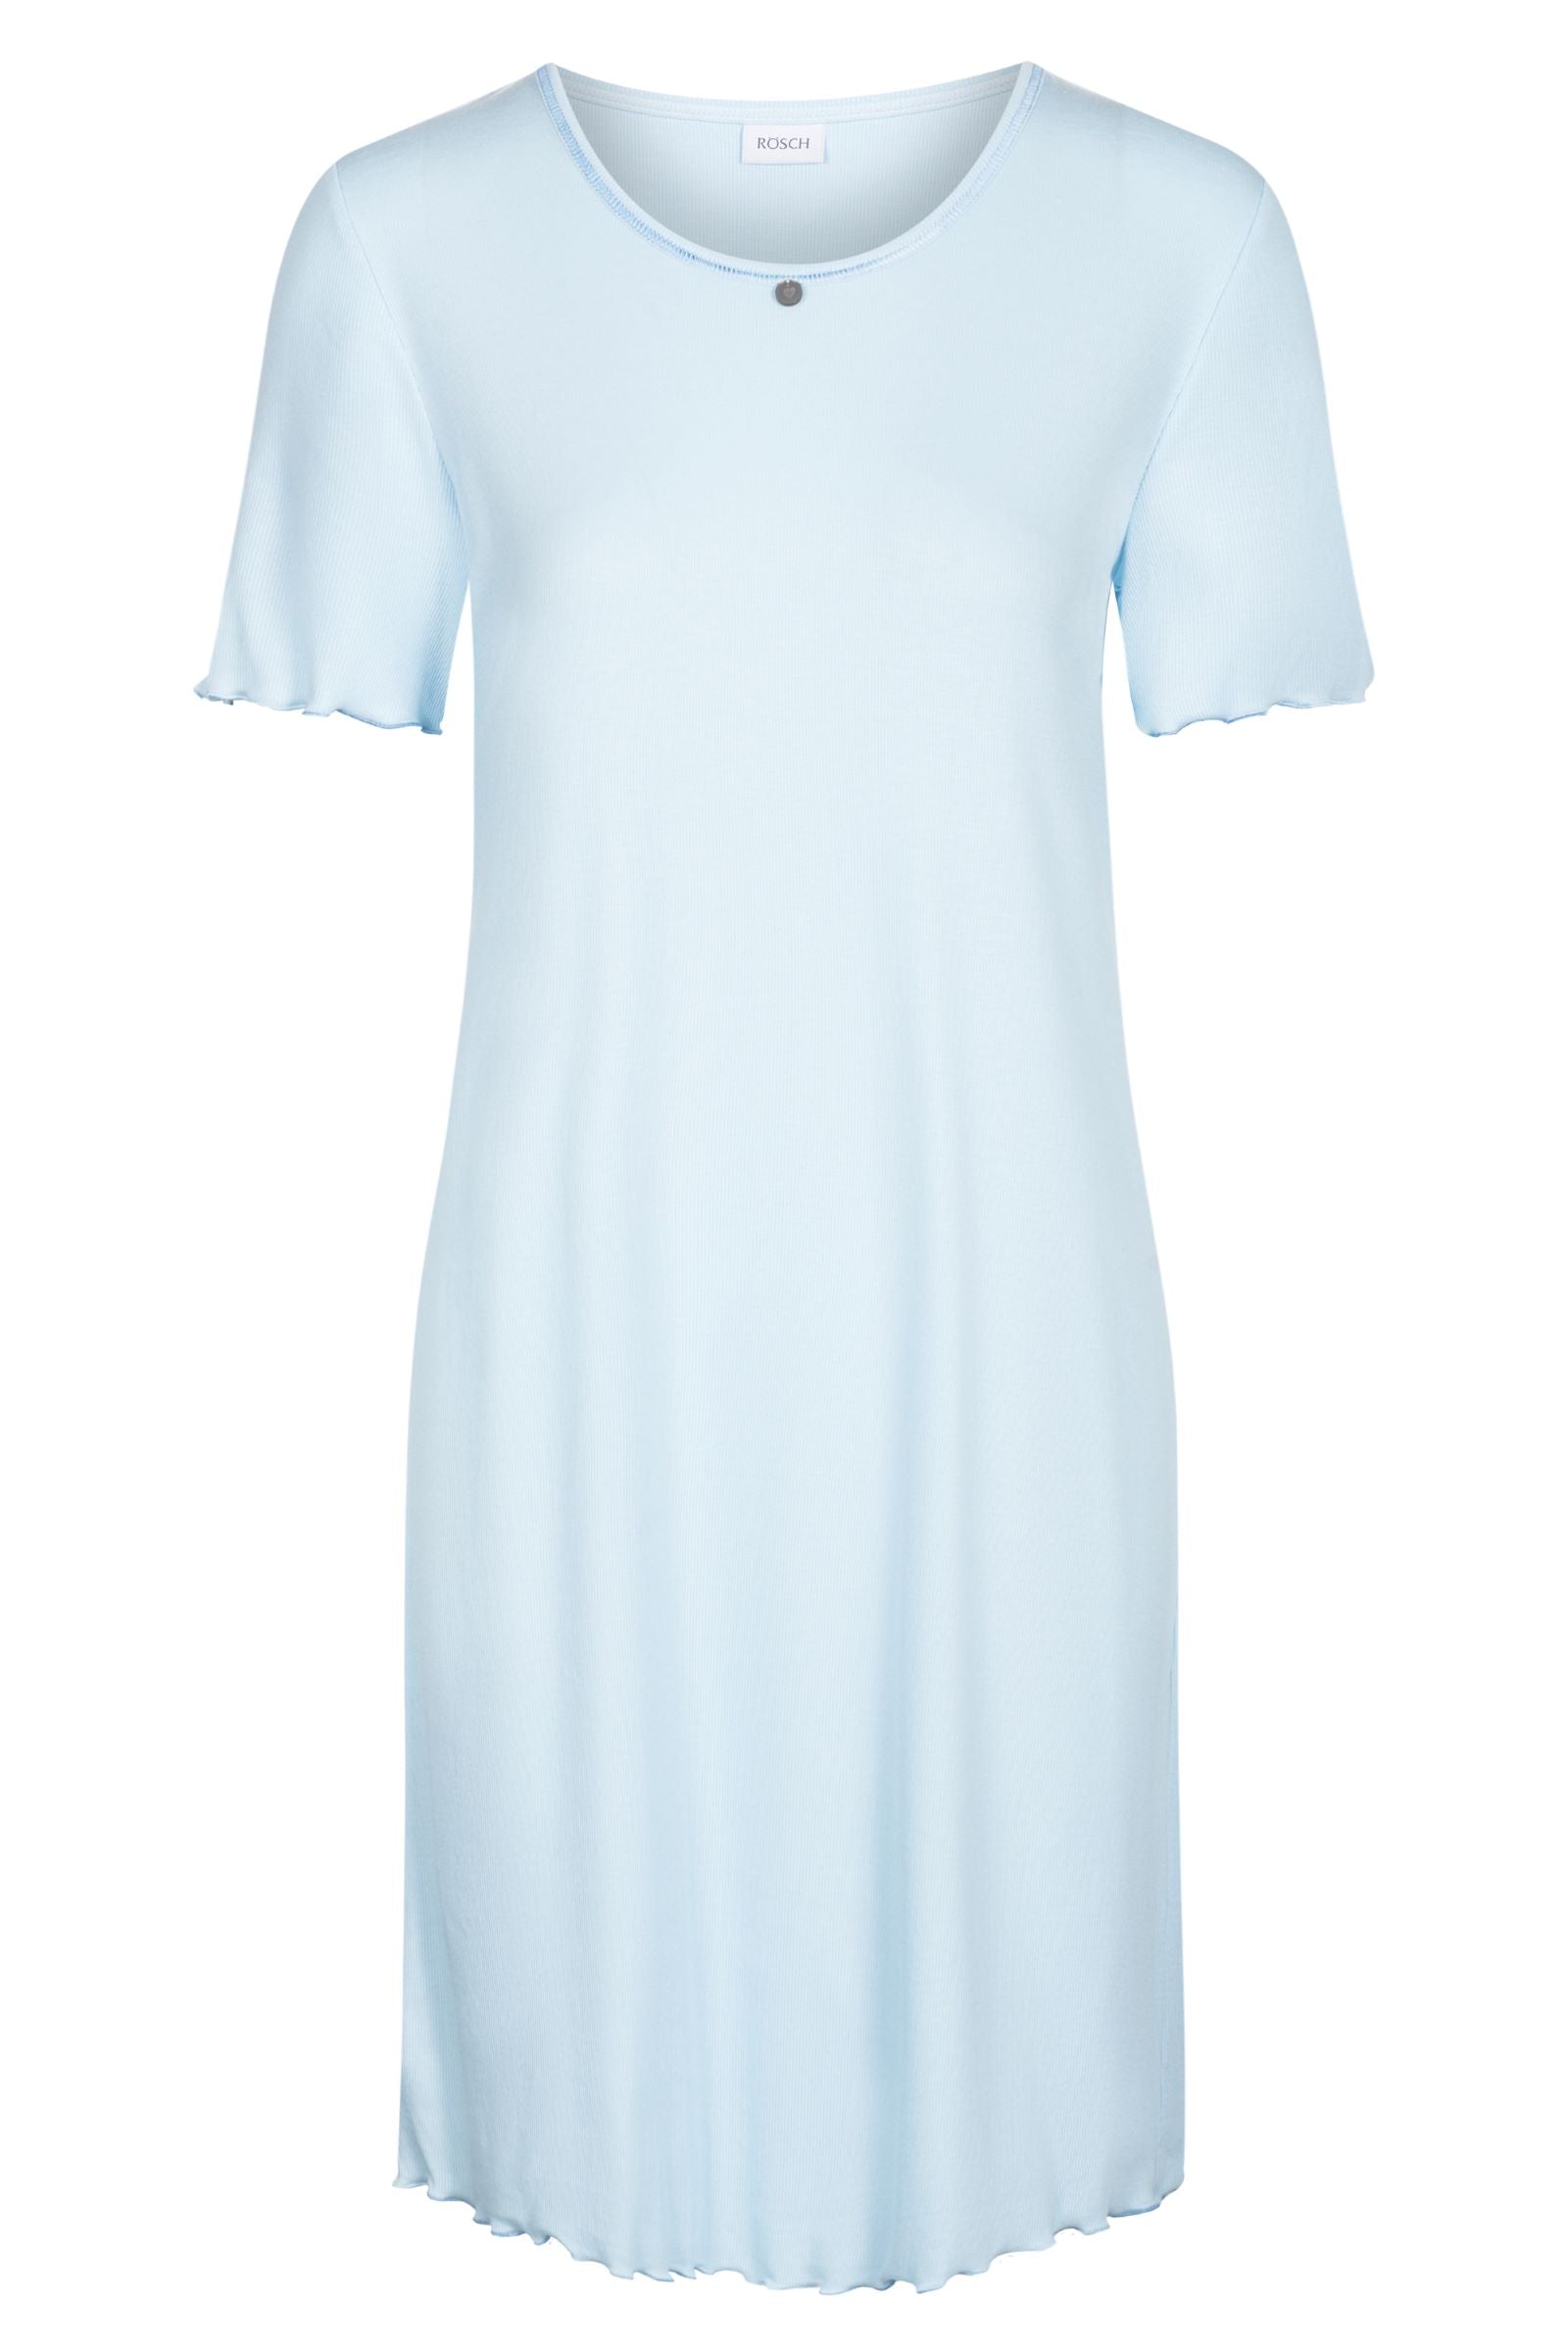 Short Sleeve Cotton Modal Nightgown